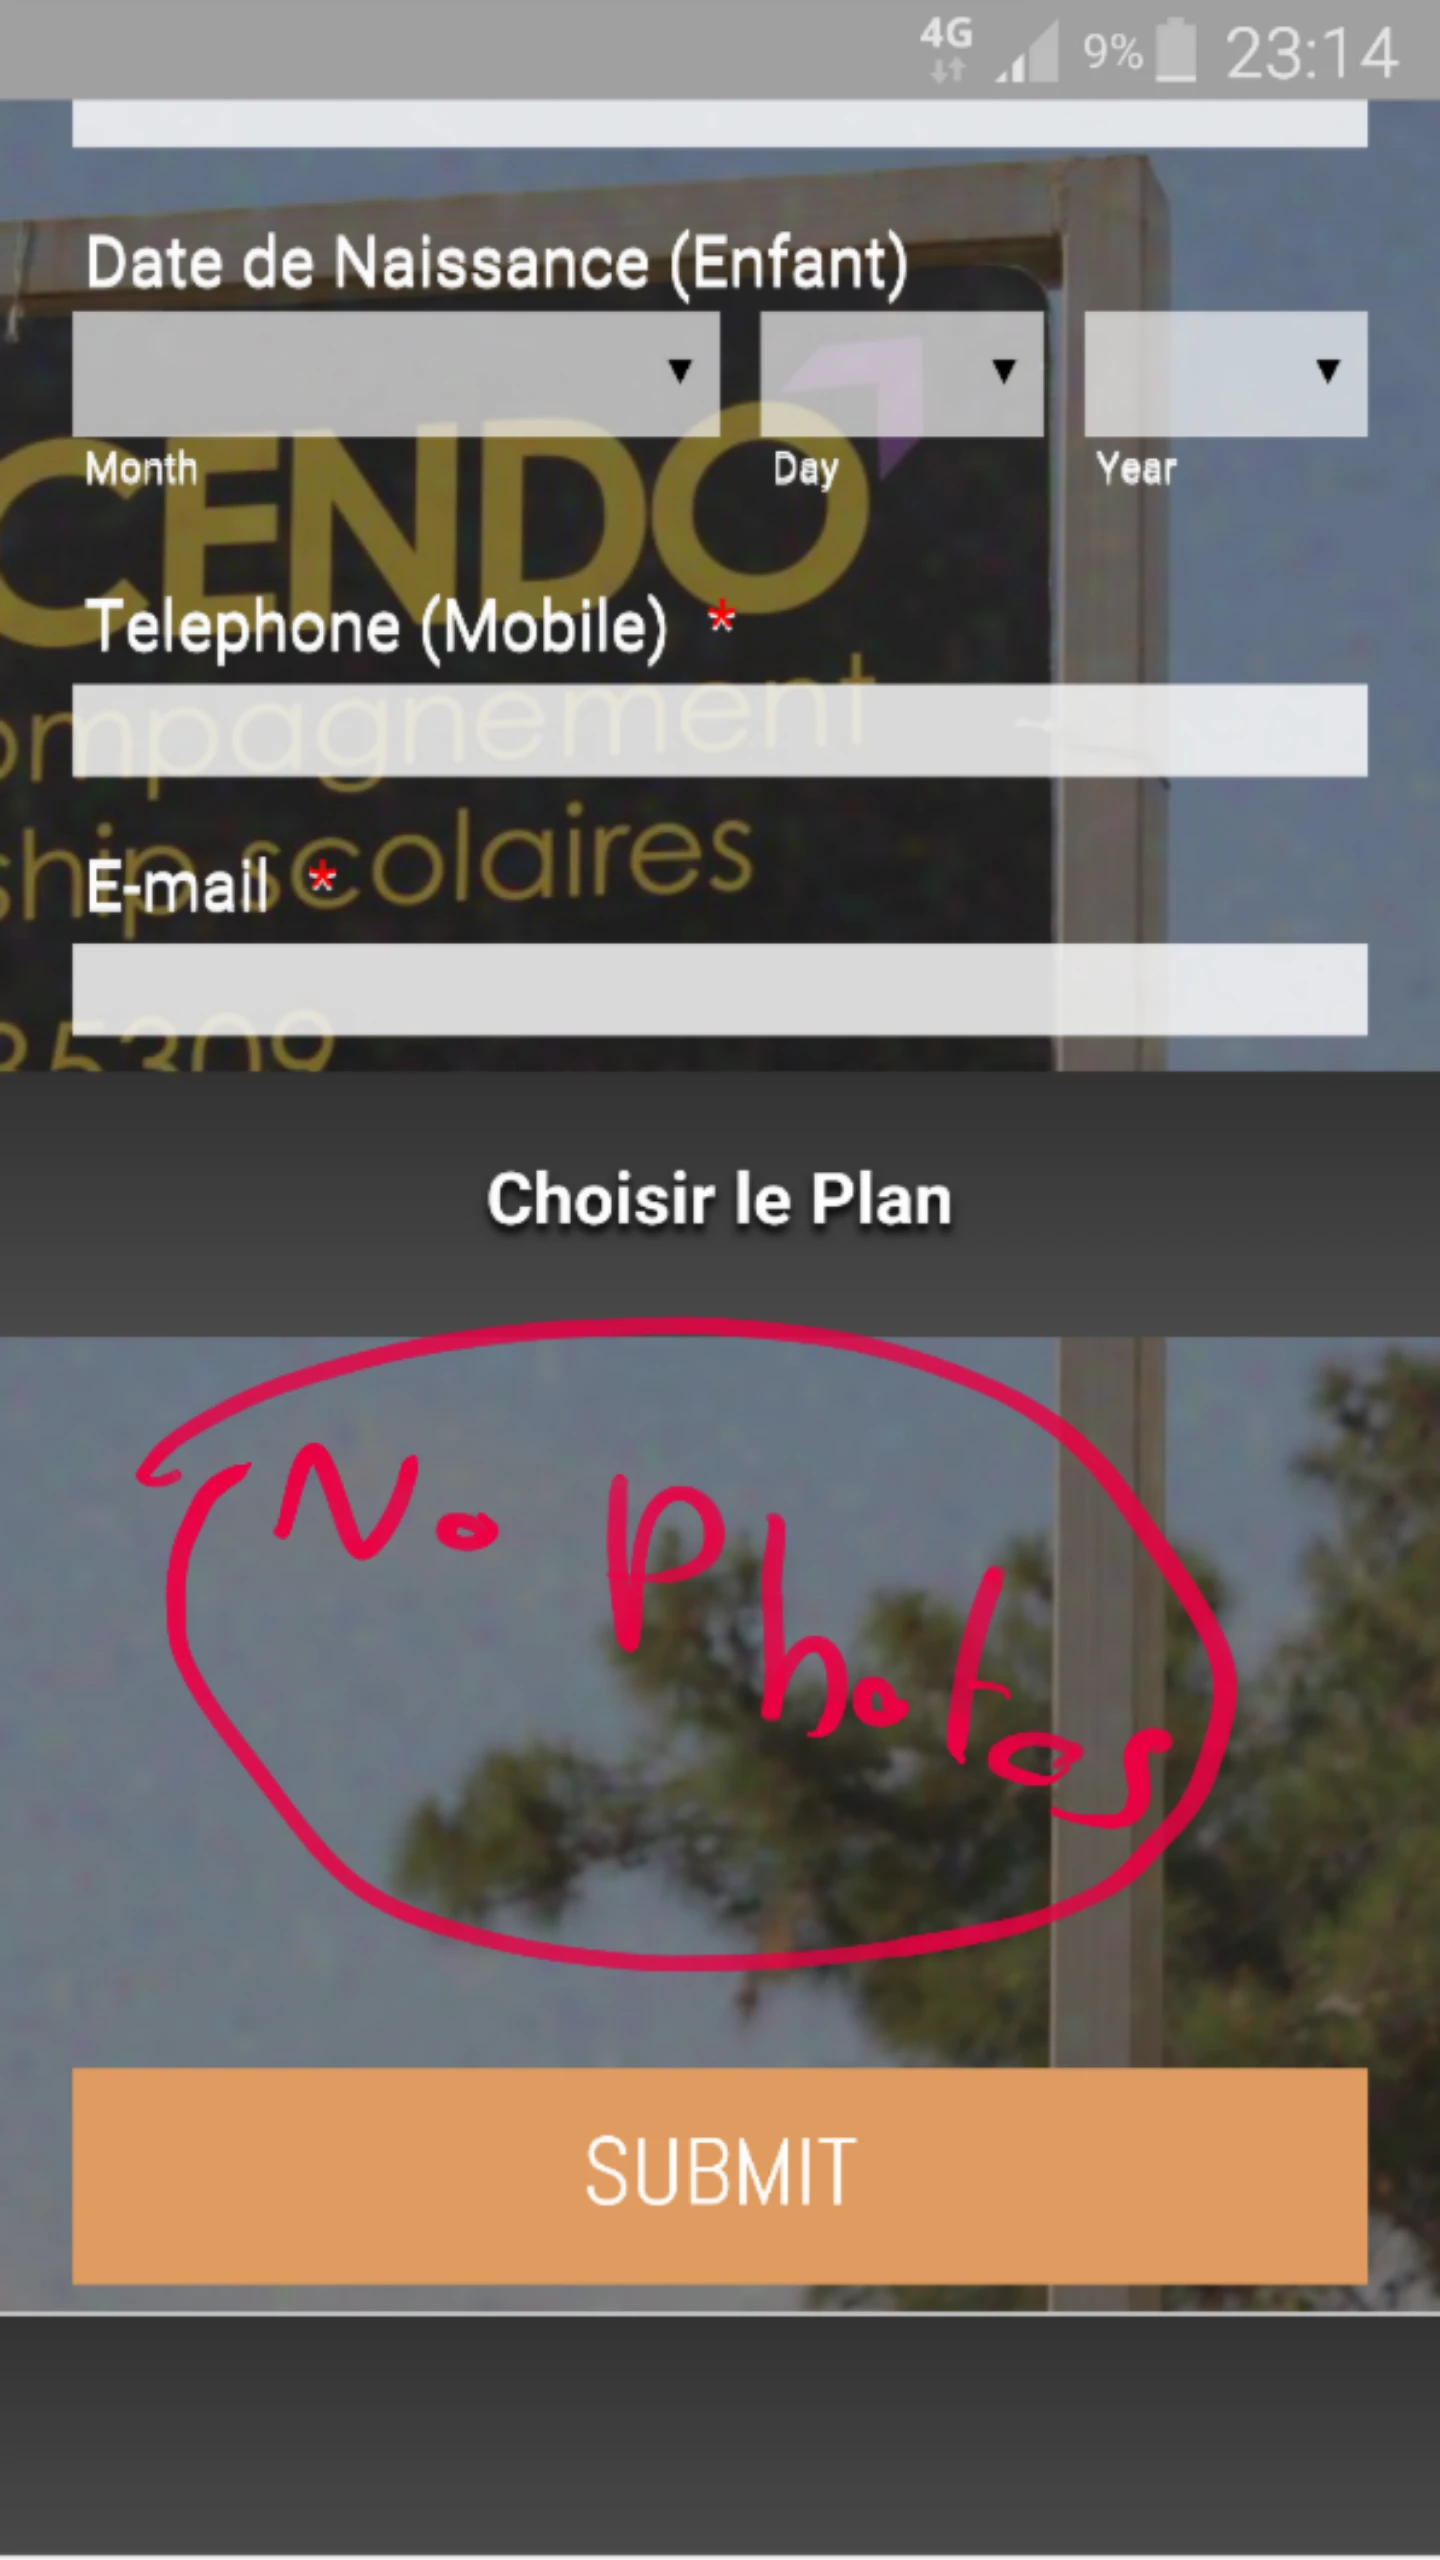 Image radio widget not showing images on mobile Image 1 Screenshot 30